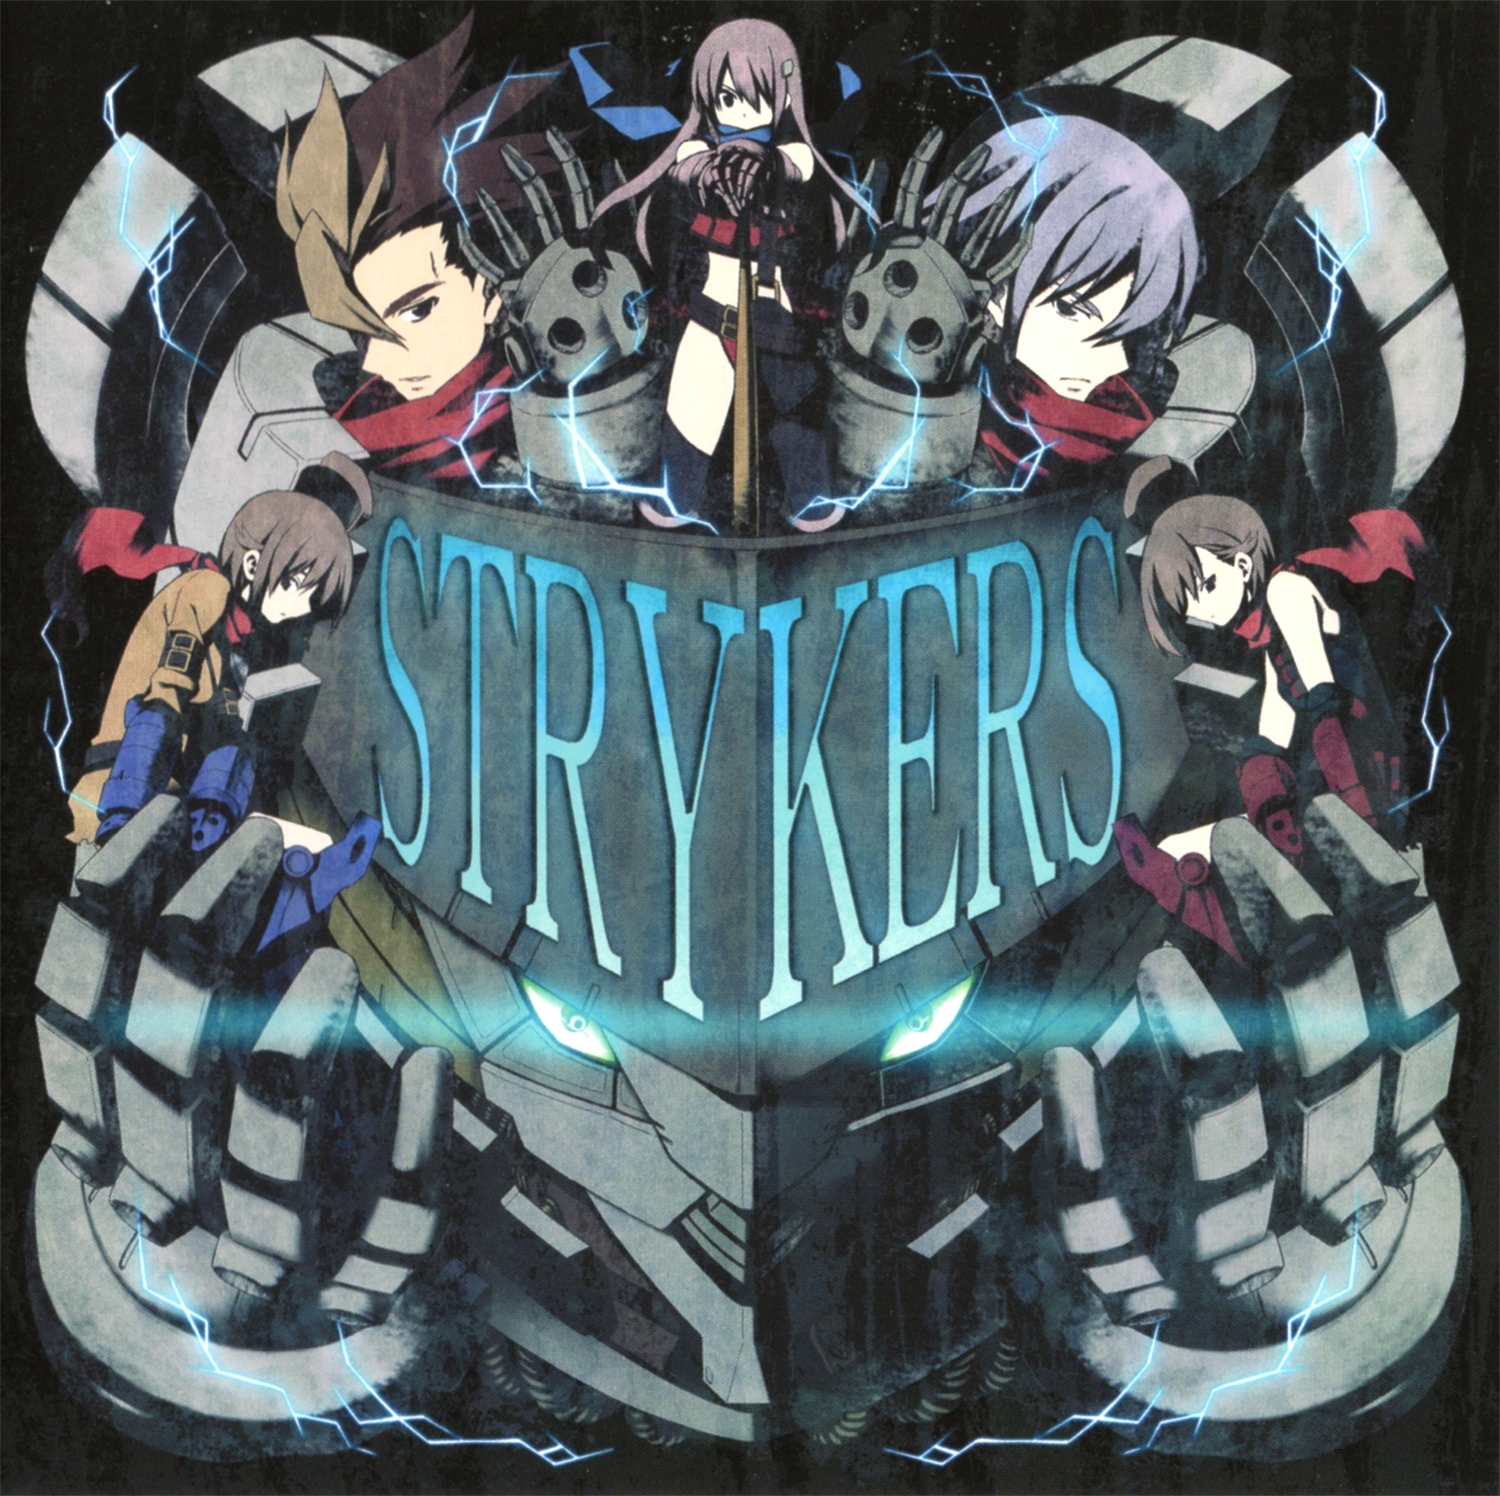 【WAV】ゲーム「電激ストライカー」Original Sound Track「STRYKERS」／OVERDRIVE